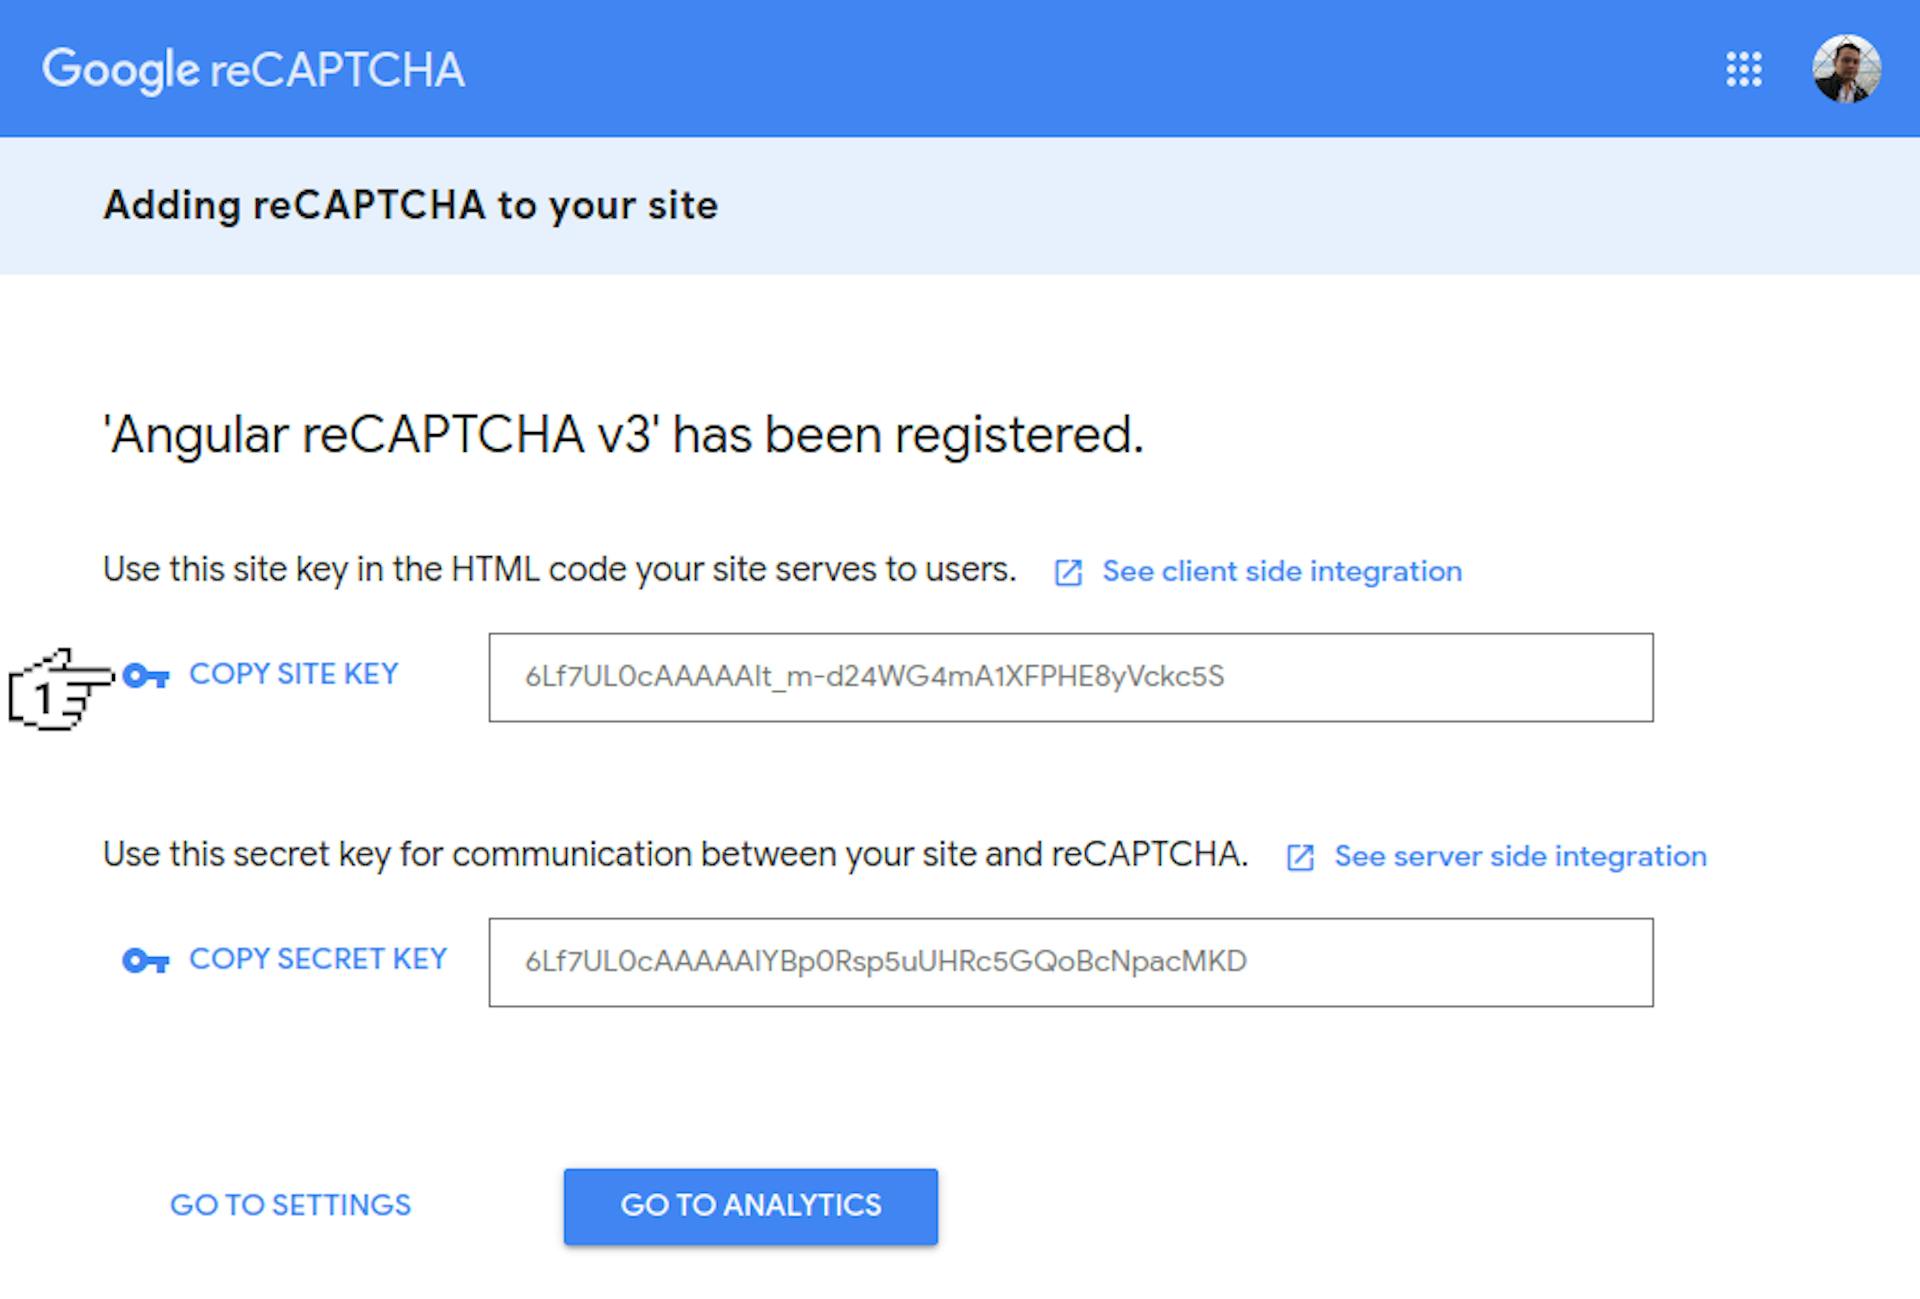 Google reCAPTCHA - Adding reCAPTCHA to your site